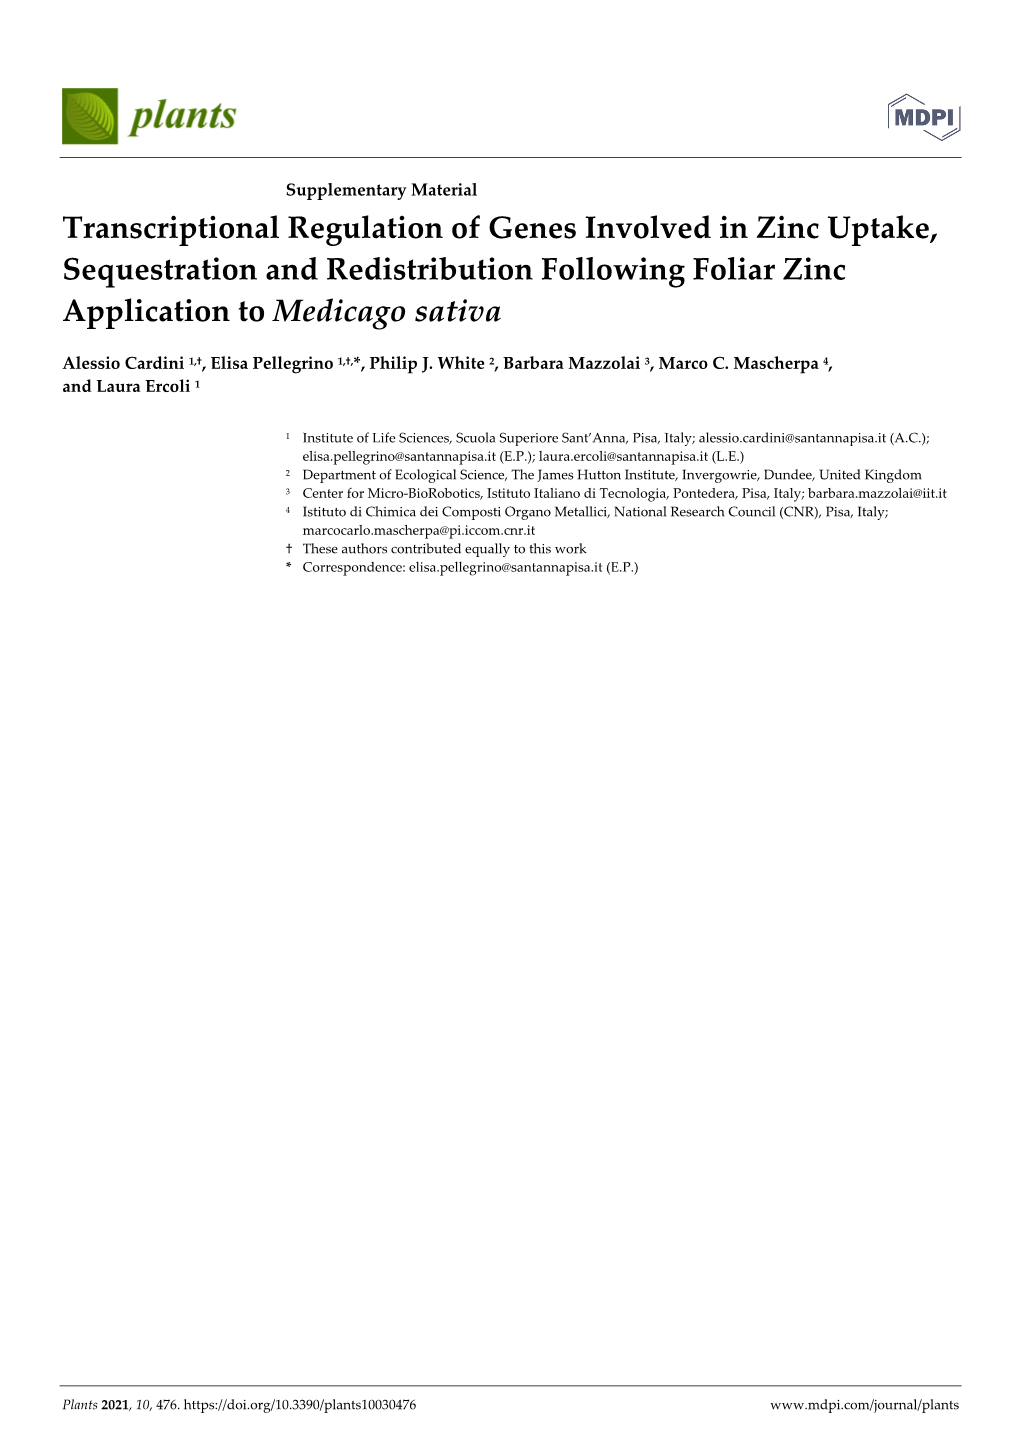 Transcriptional Regulation of Genes Involved in Zinc Uptake, Sequestration and Redistribution Following Foliar Zinc Application to Medicago Sativa